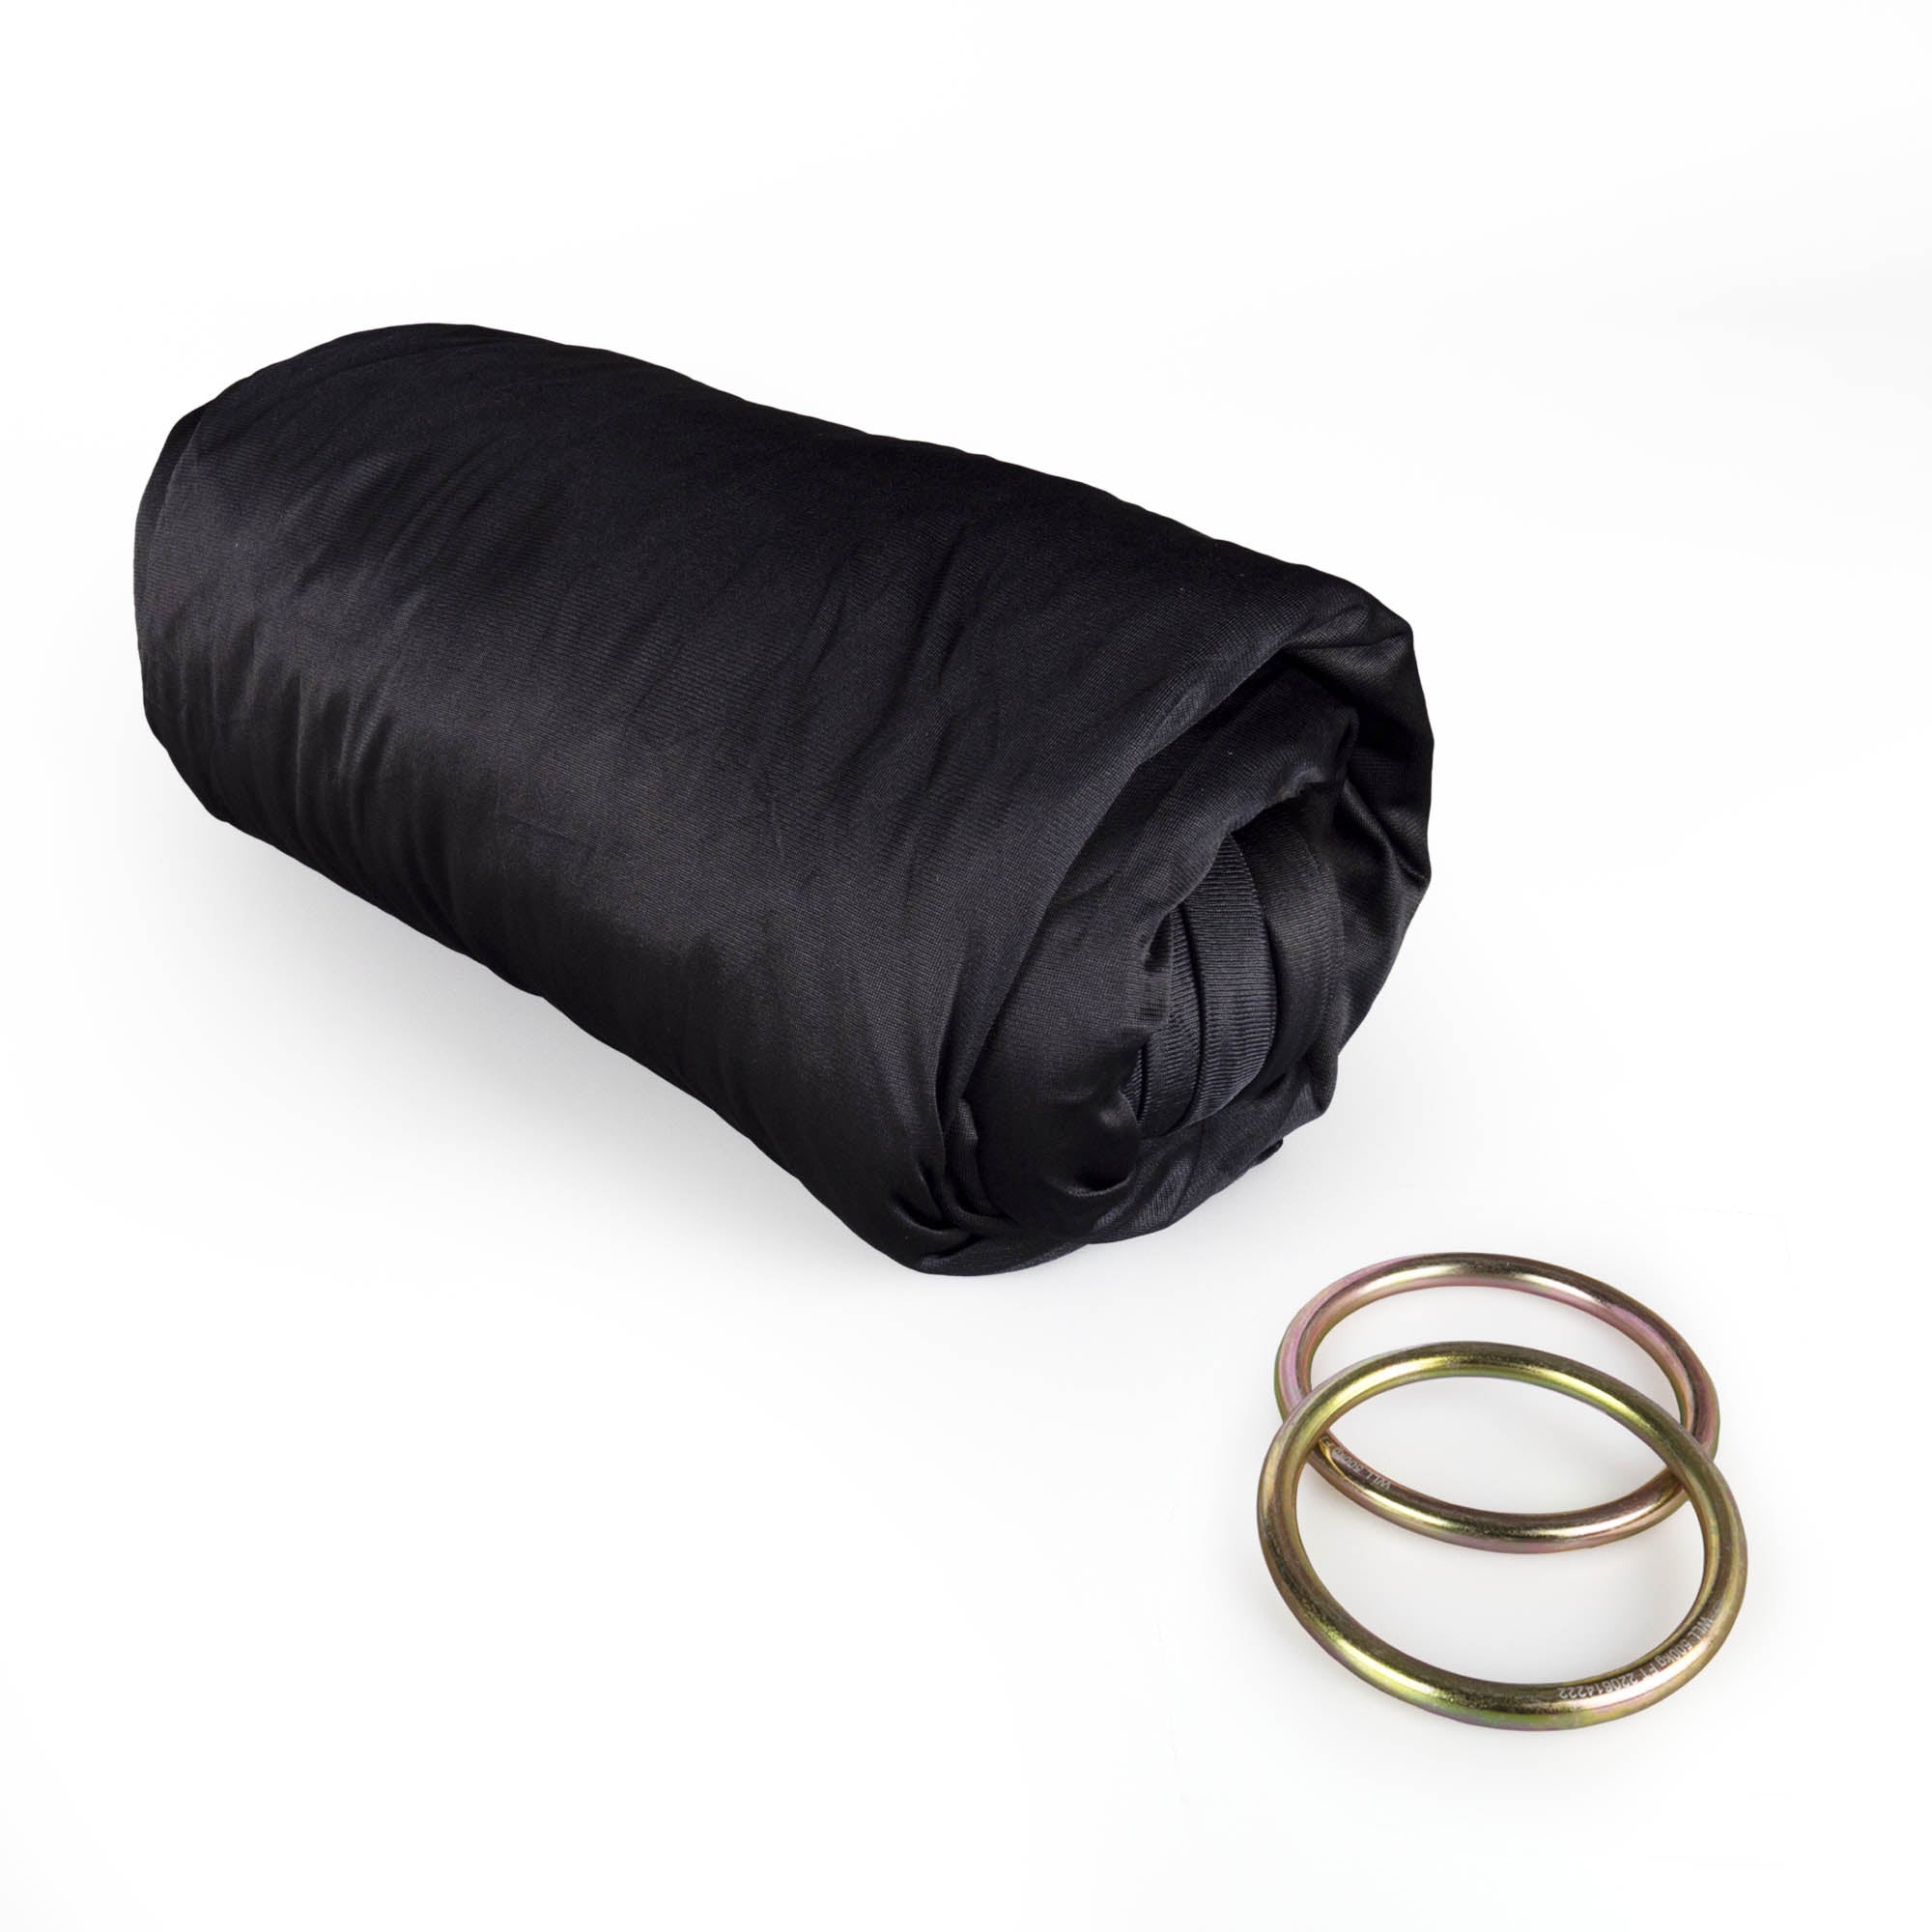 Black yoga hammock with O rings detached